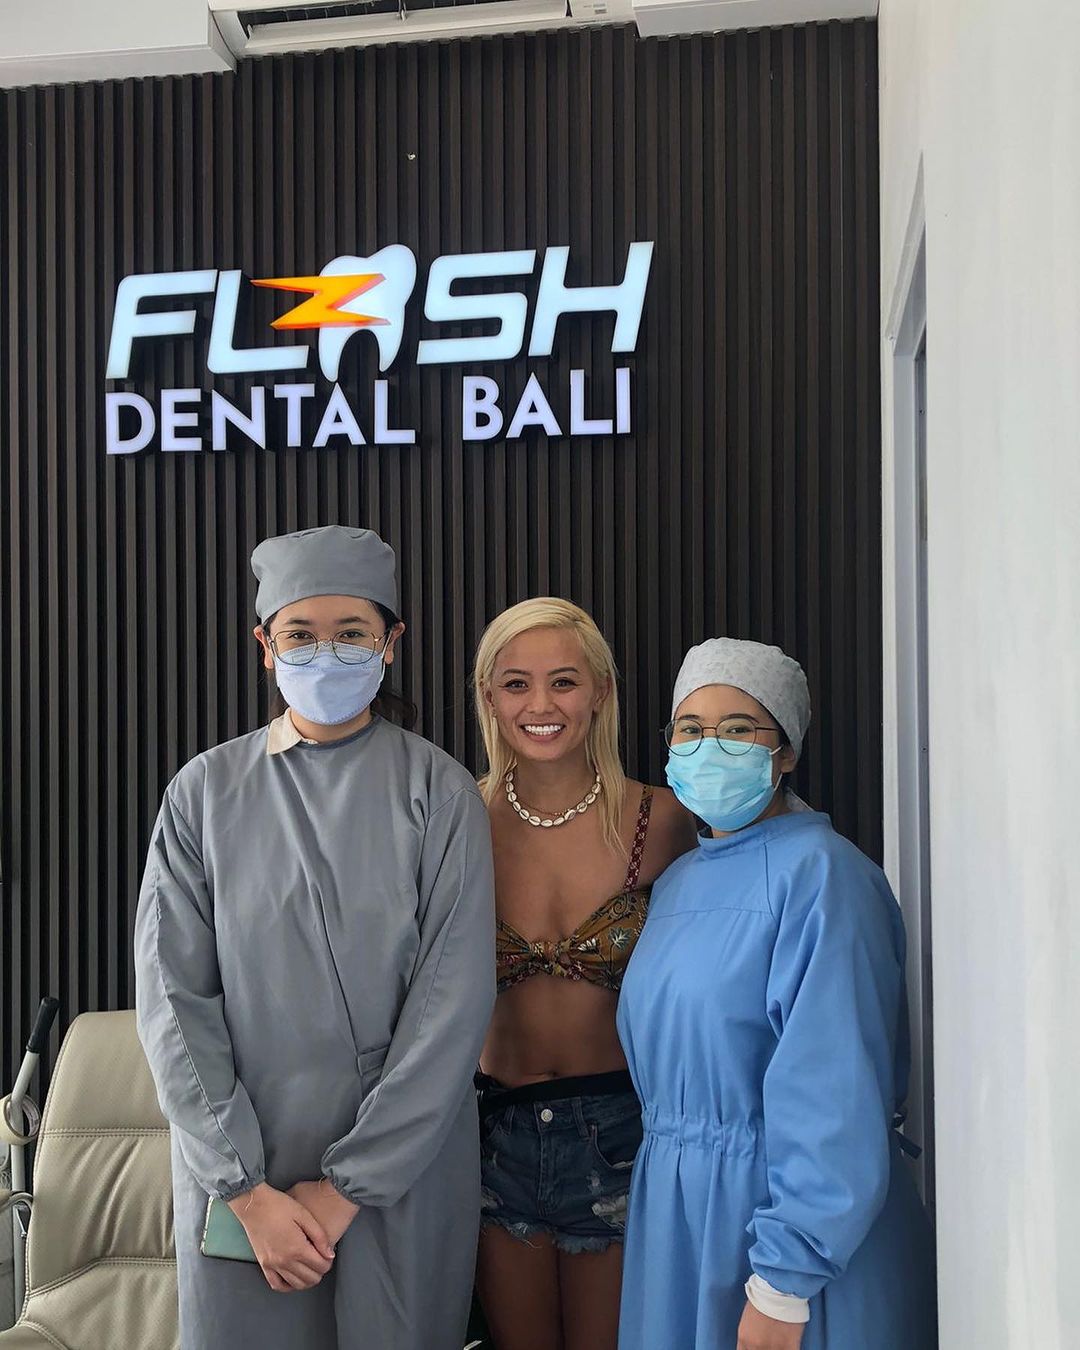 Flash Dental